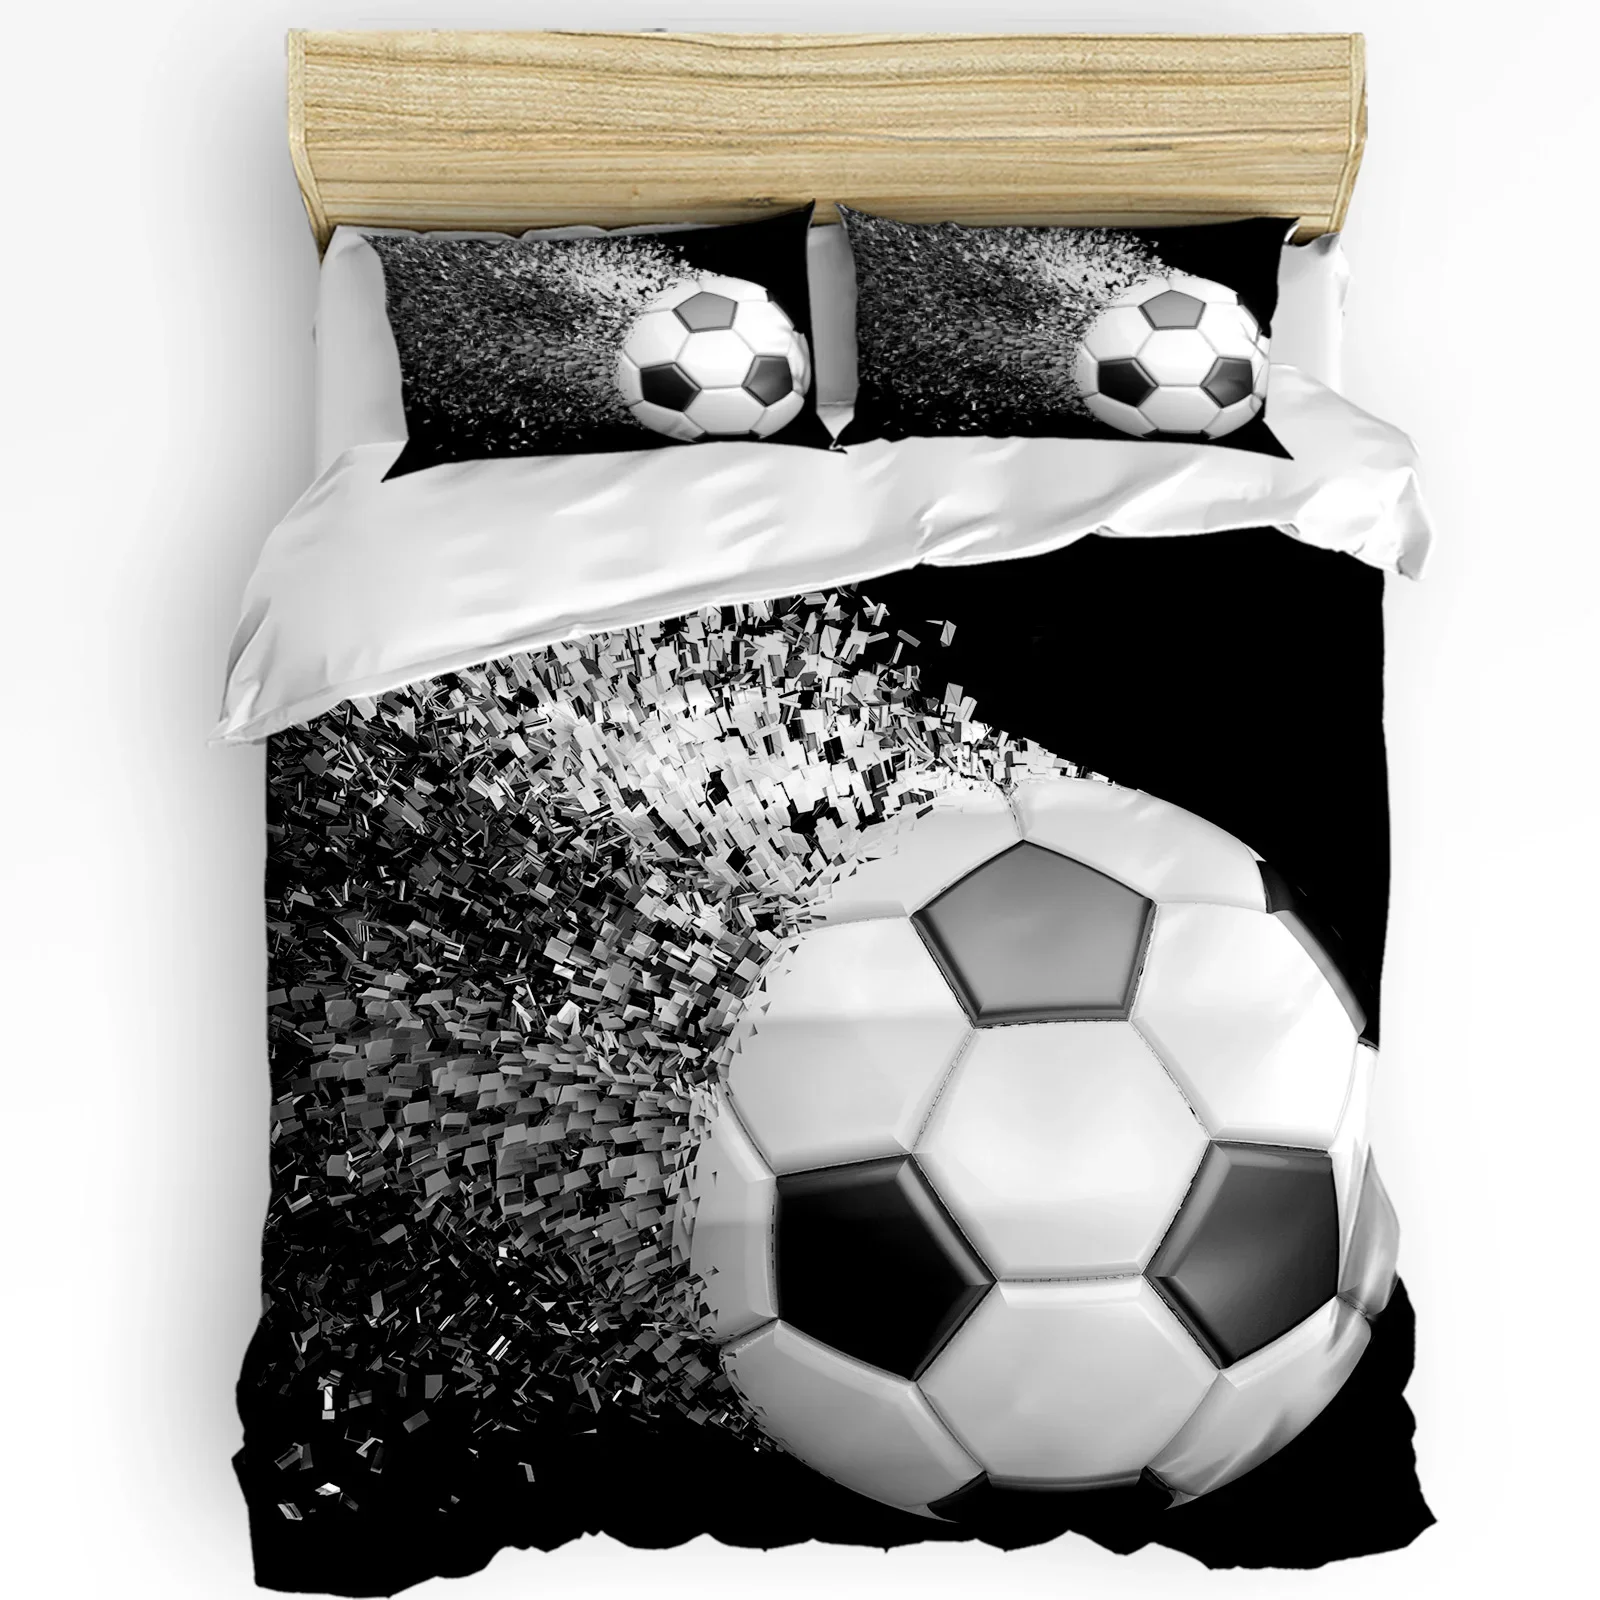 3pcs-bedding-set-soccer-balls-football-design-home-textile-duvet-cover-pillow-case-boy-kid-teen-girl-bedding-covers-set